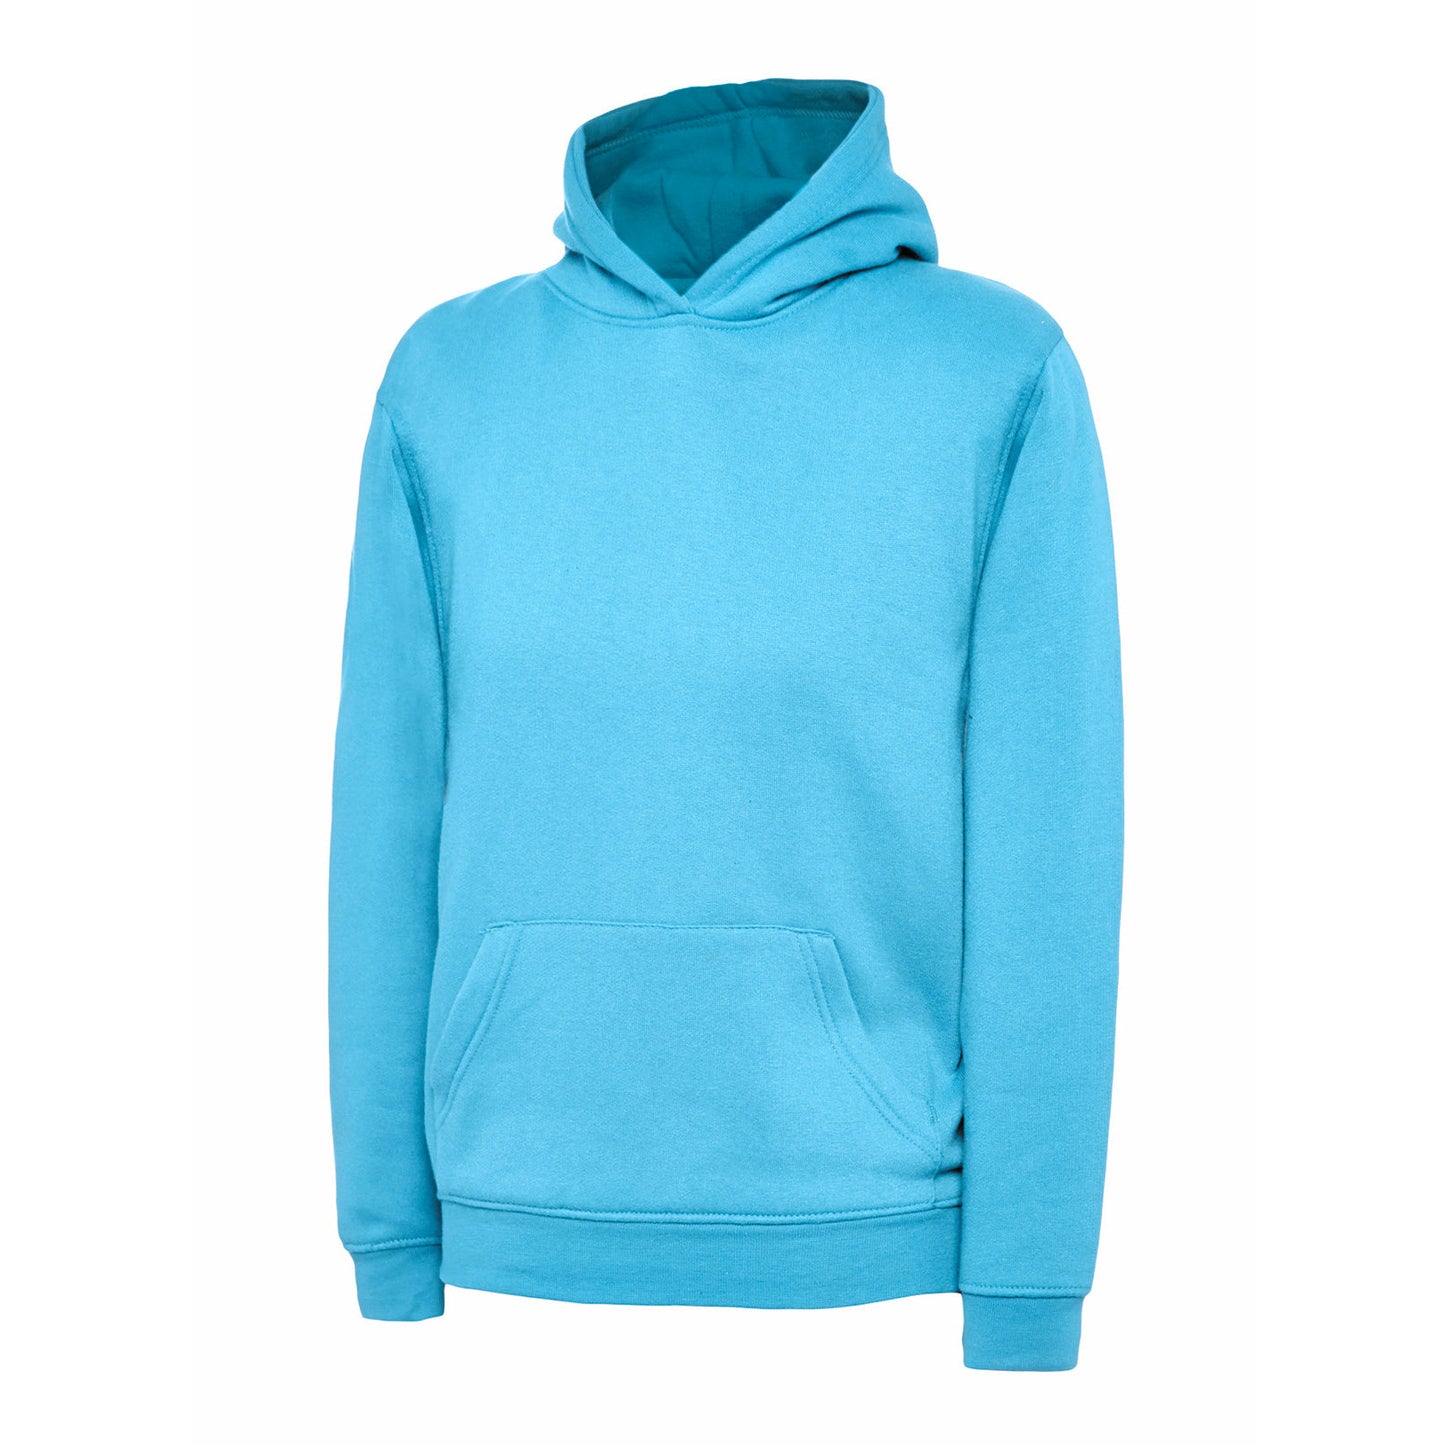 Childrens Hooded Sweatshirt (2 - 4 YRS) Sky Blue